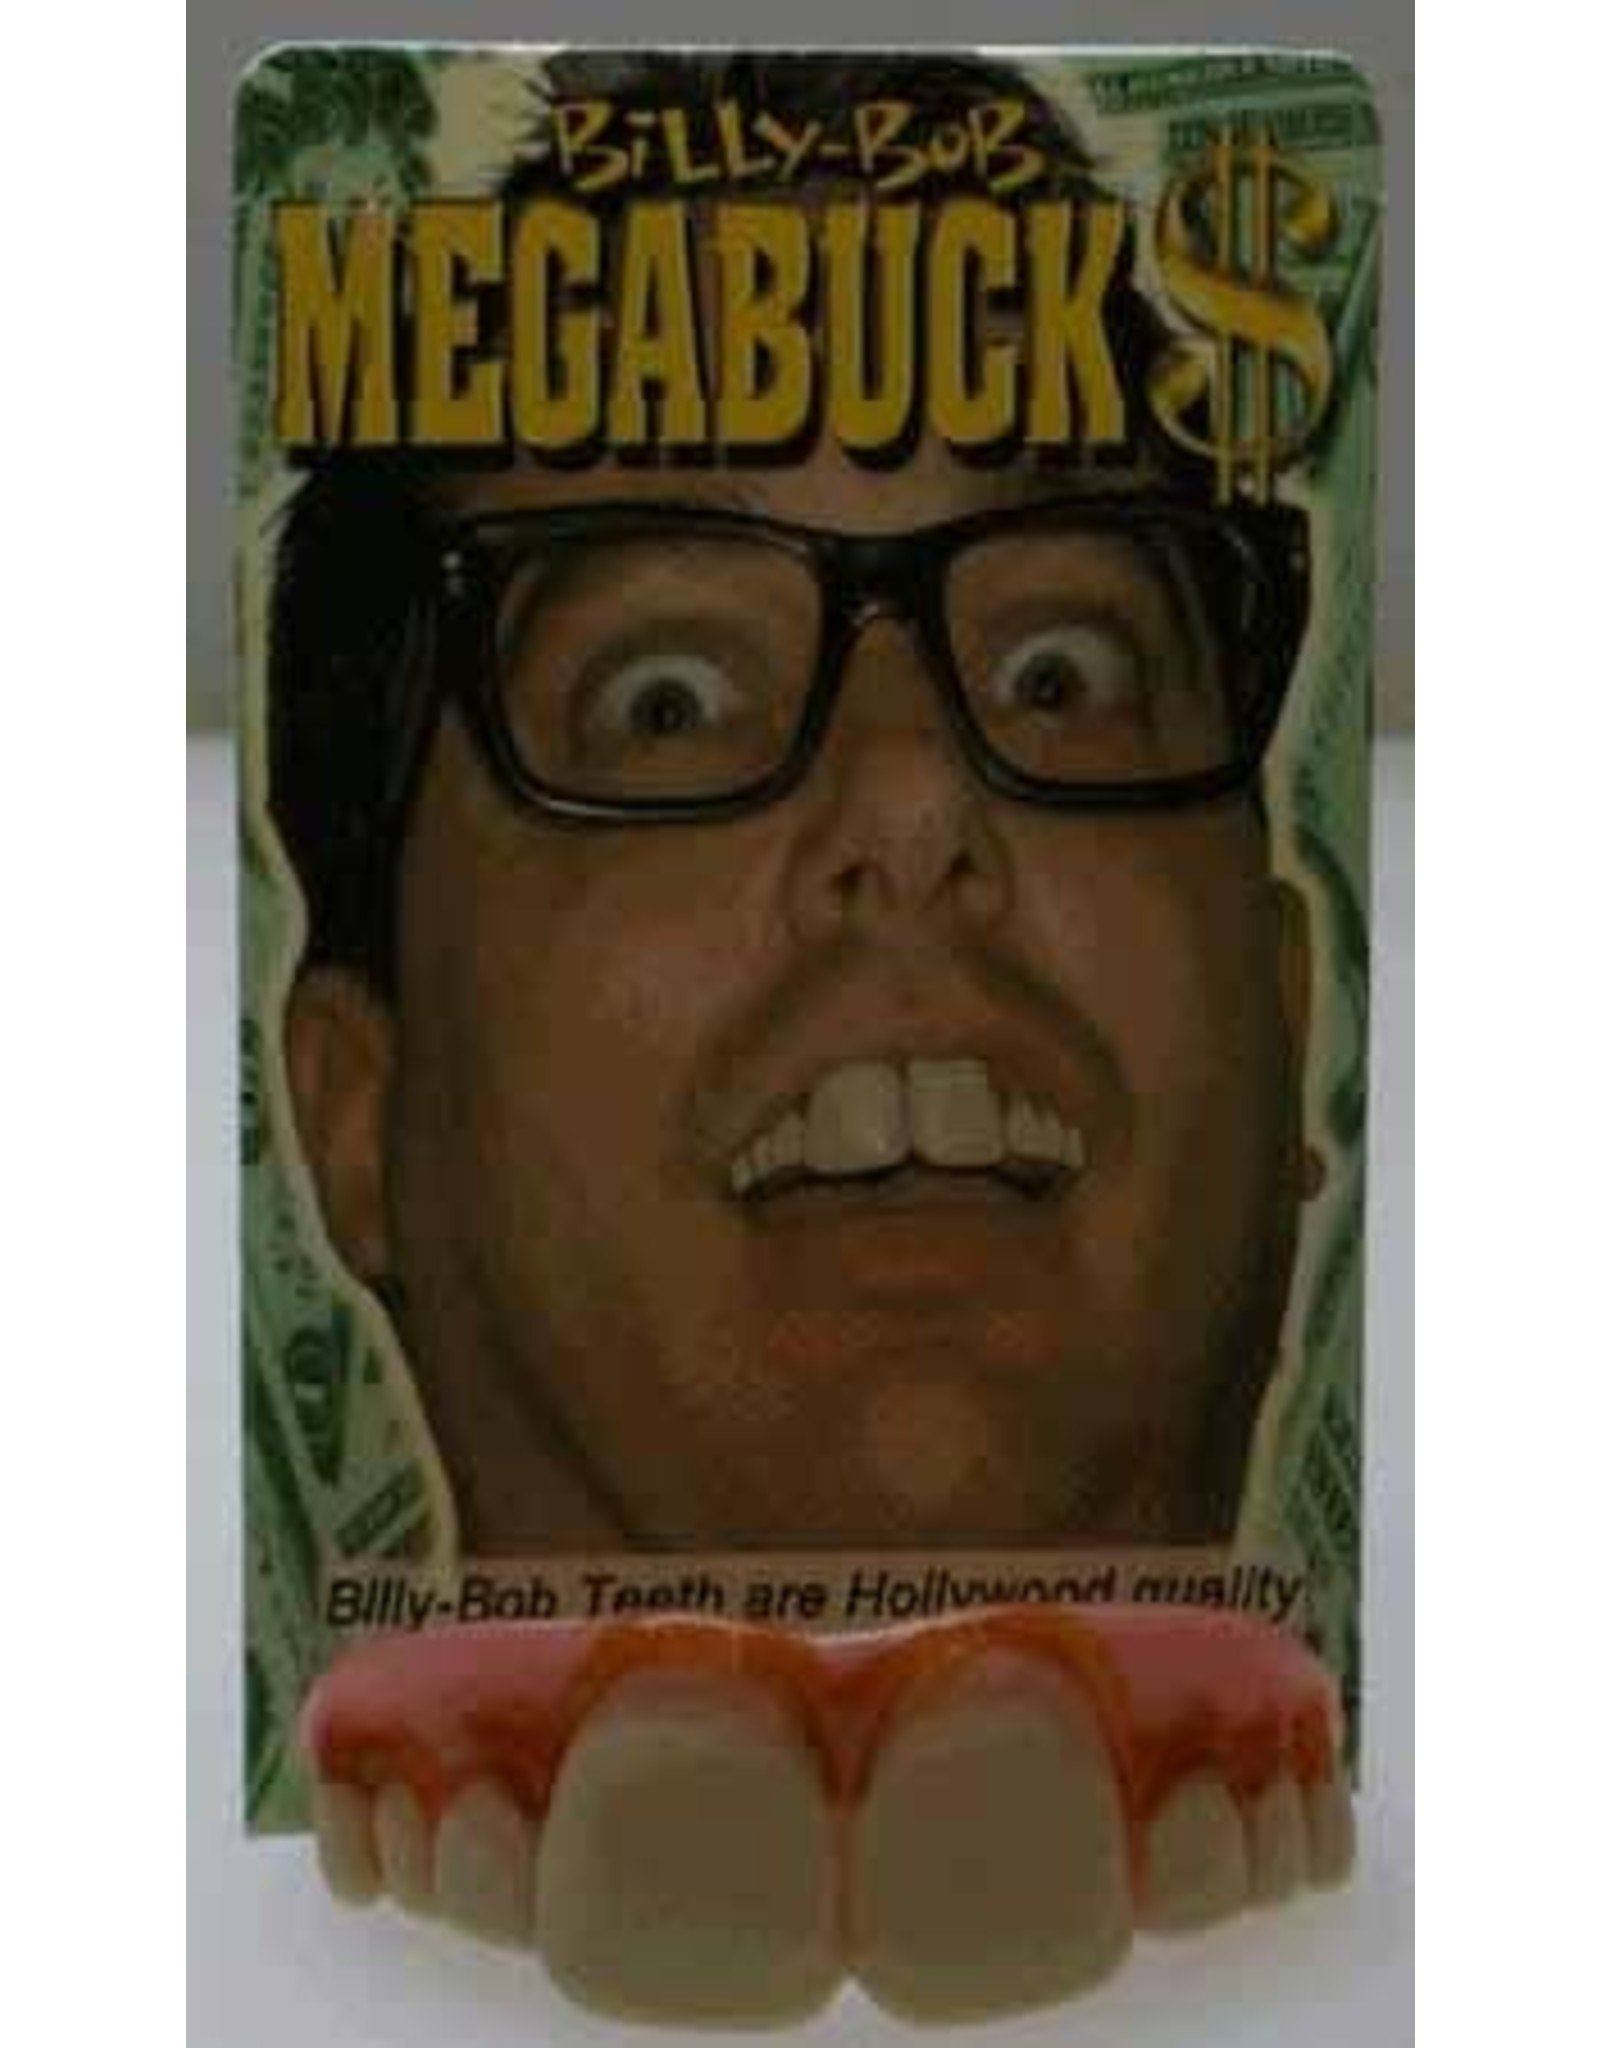 Billy-Bob Products Megabucks Teeth